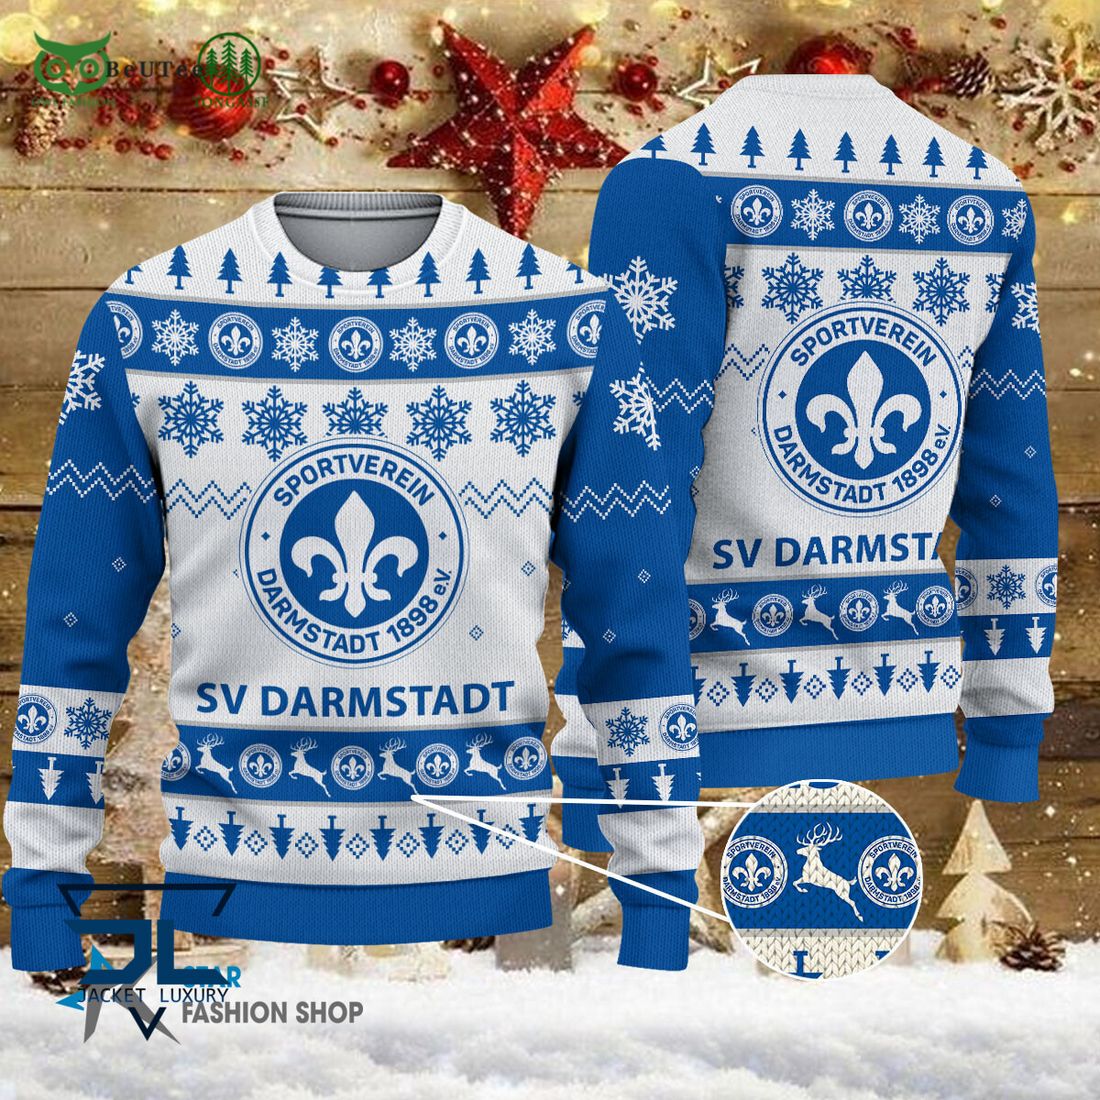 darmstadt 98 bundesliga football 3d ugly sweater 1 785Mw